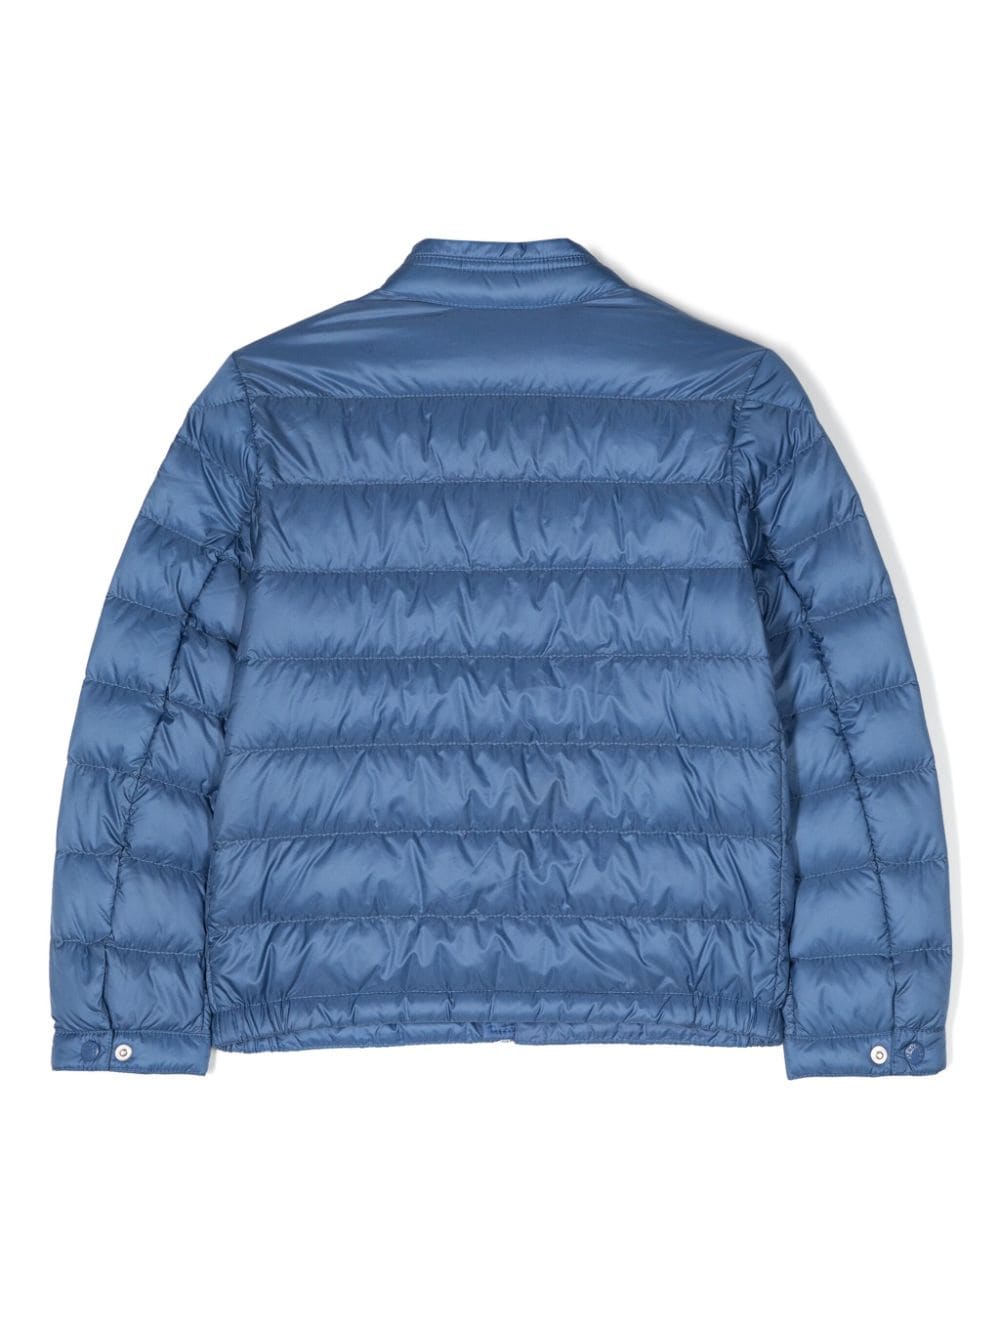 Blue Acorus jacket for boys with logo